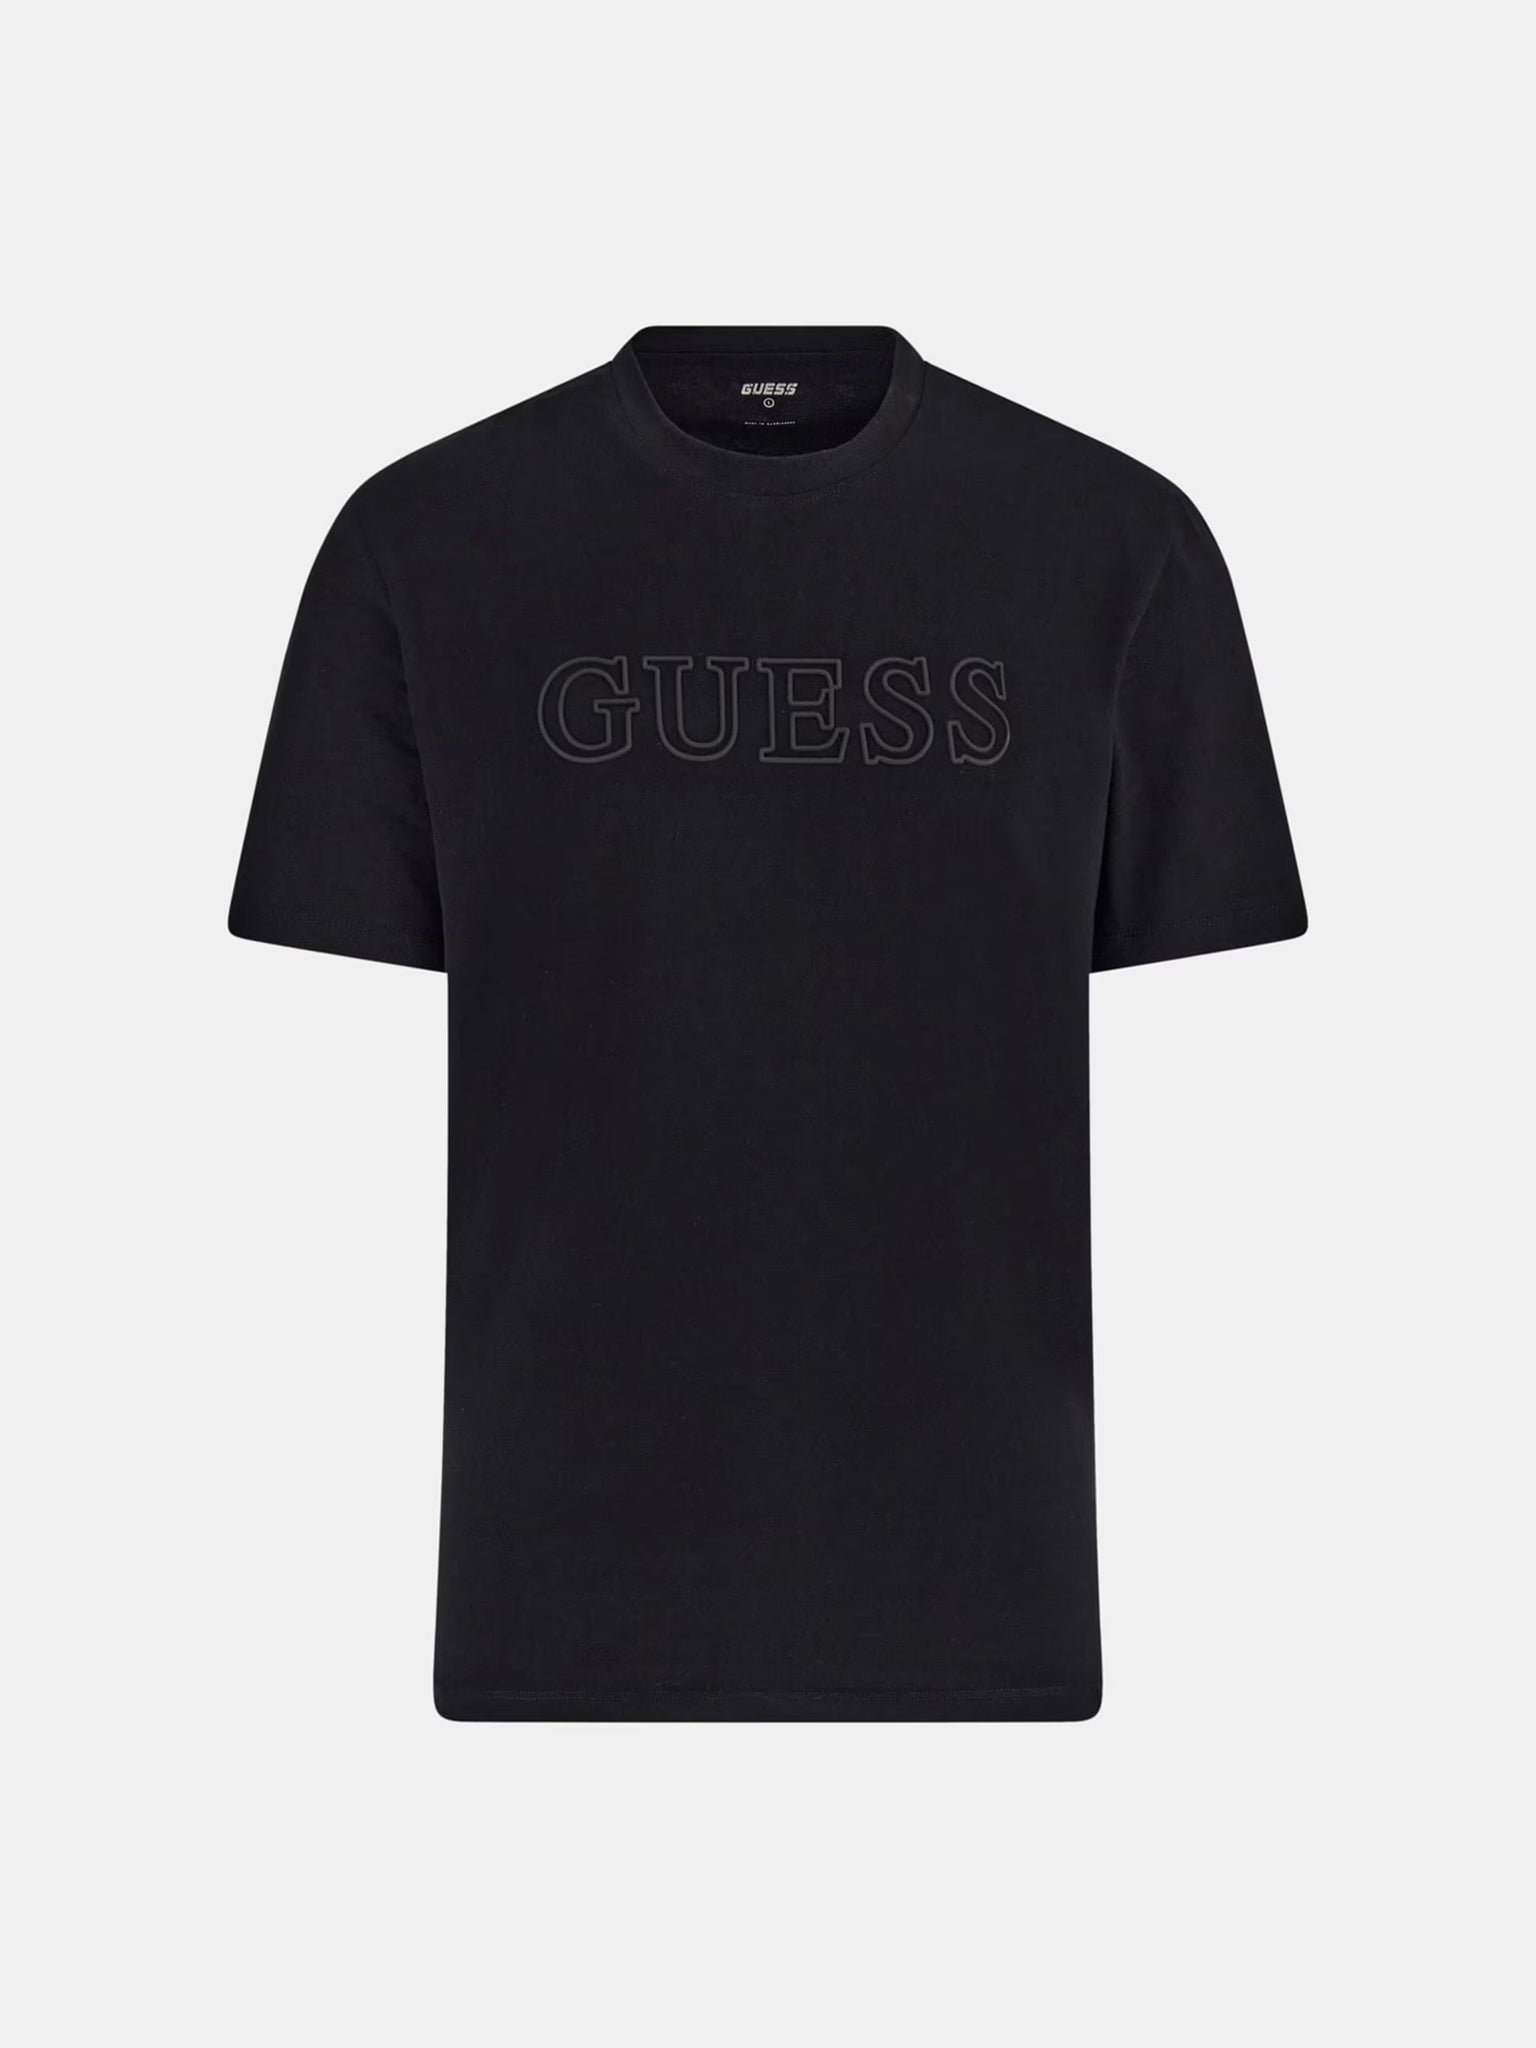 Guess Front Logo T-Shirt Black